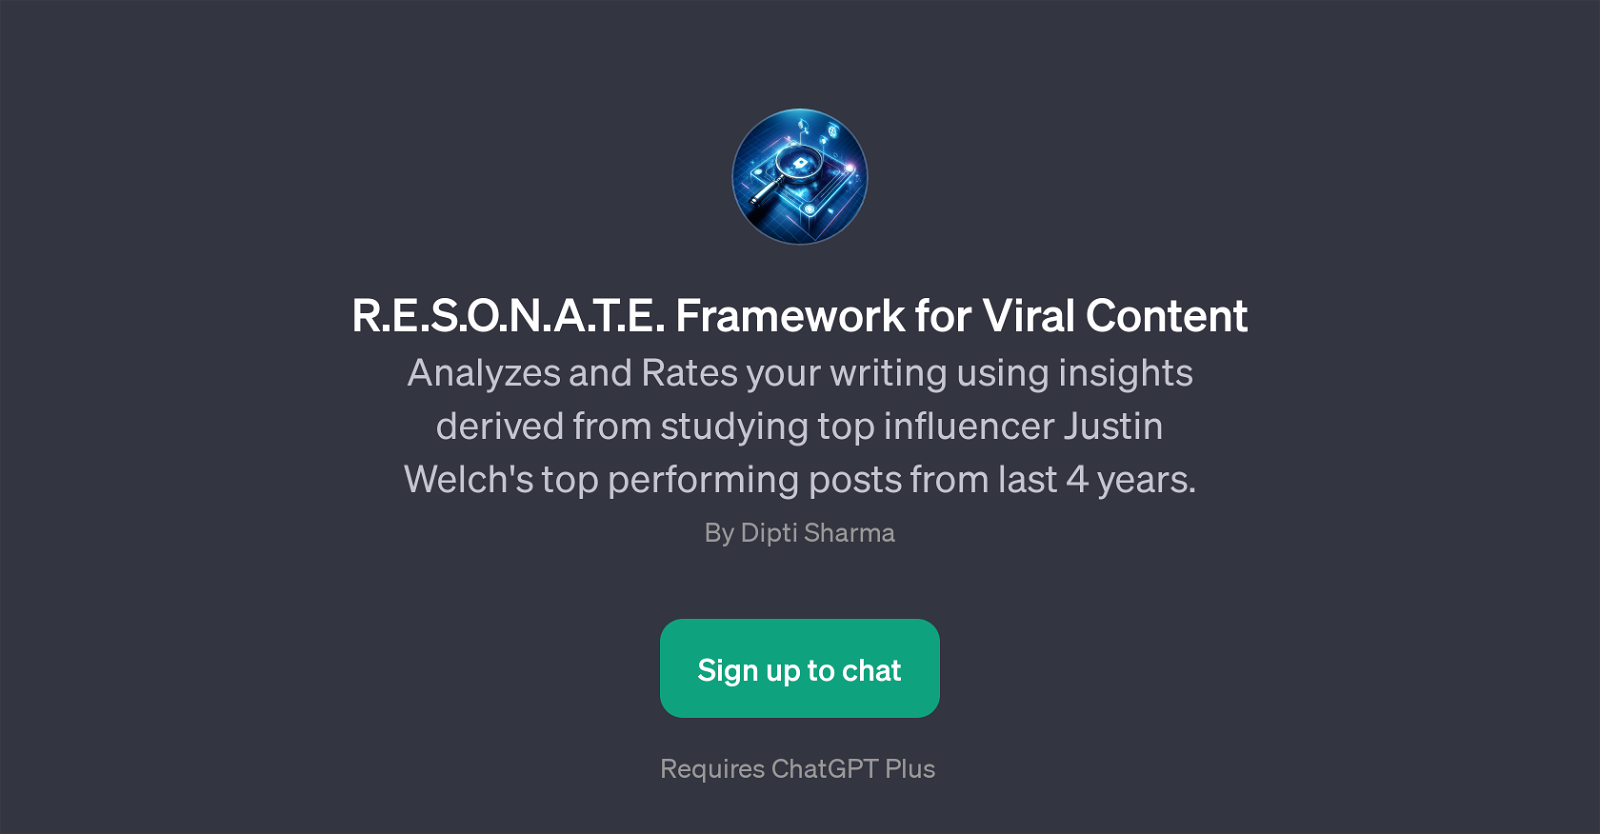 R.E.S.O.N.A.T.E. Framework for Viral Content website